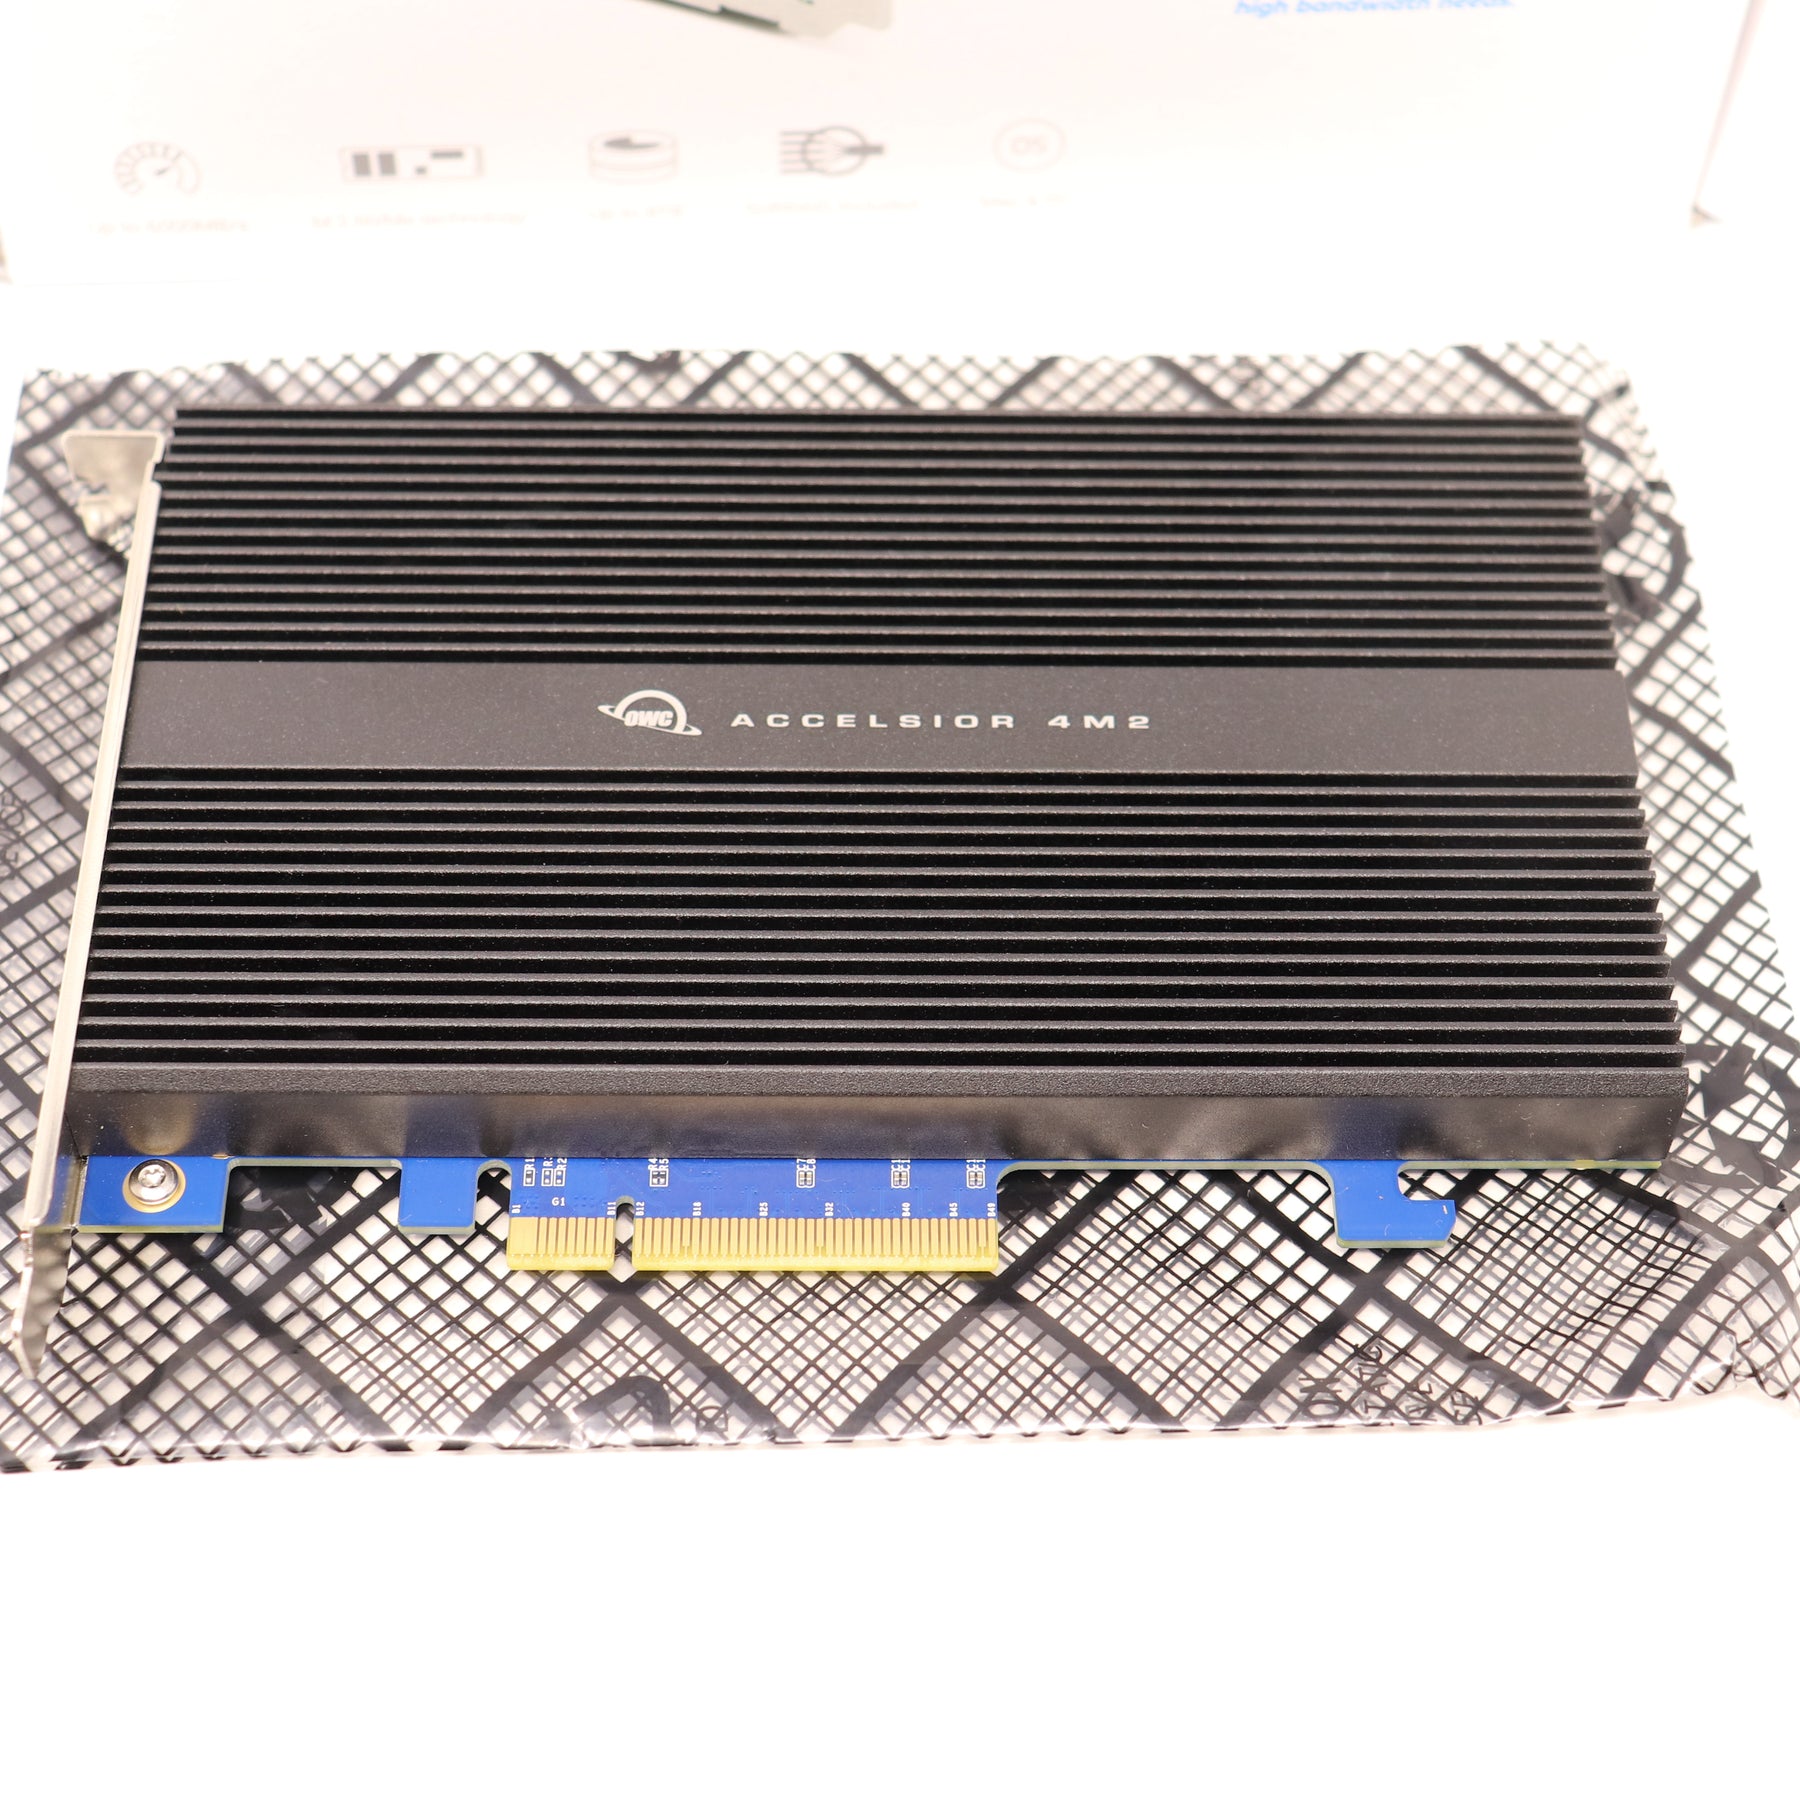 OWC Accelsior 4m2 PCIe M.2 NVMe SSD Storage Solution